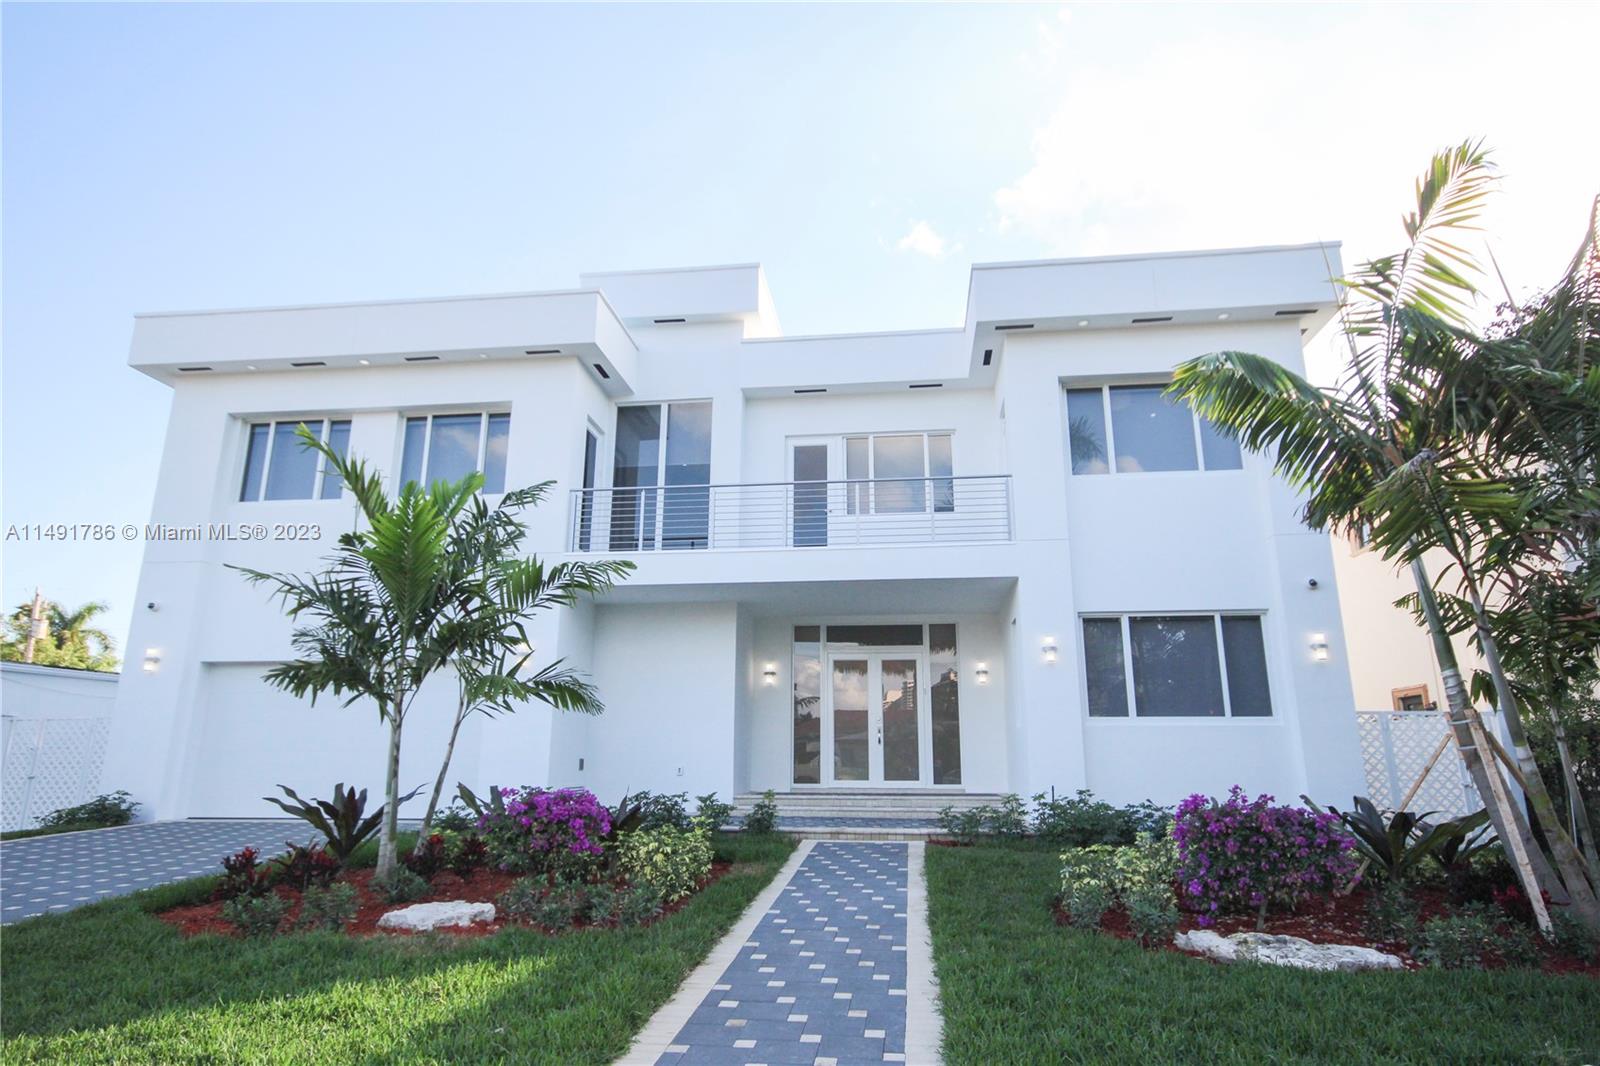 Rental Property at 362 189th St, Sunny Isles Beach, Miami-Dade County, Florida - Bedrooms: 6 
Bathrooms: 5  - $25,000 MO.